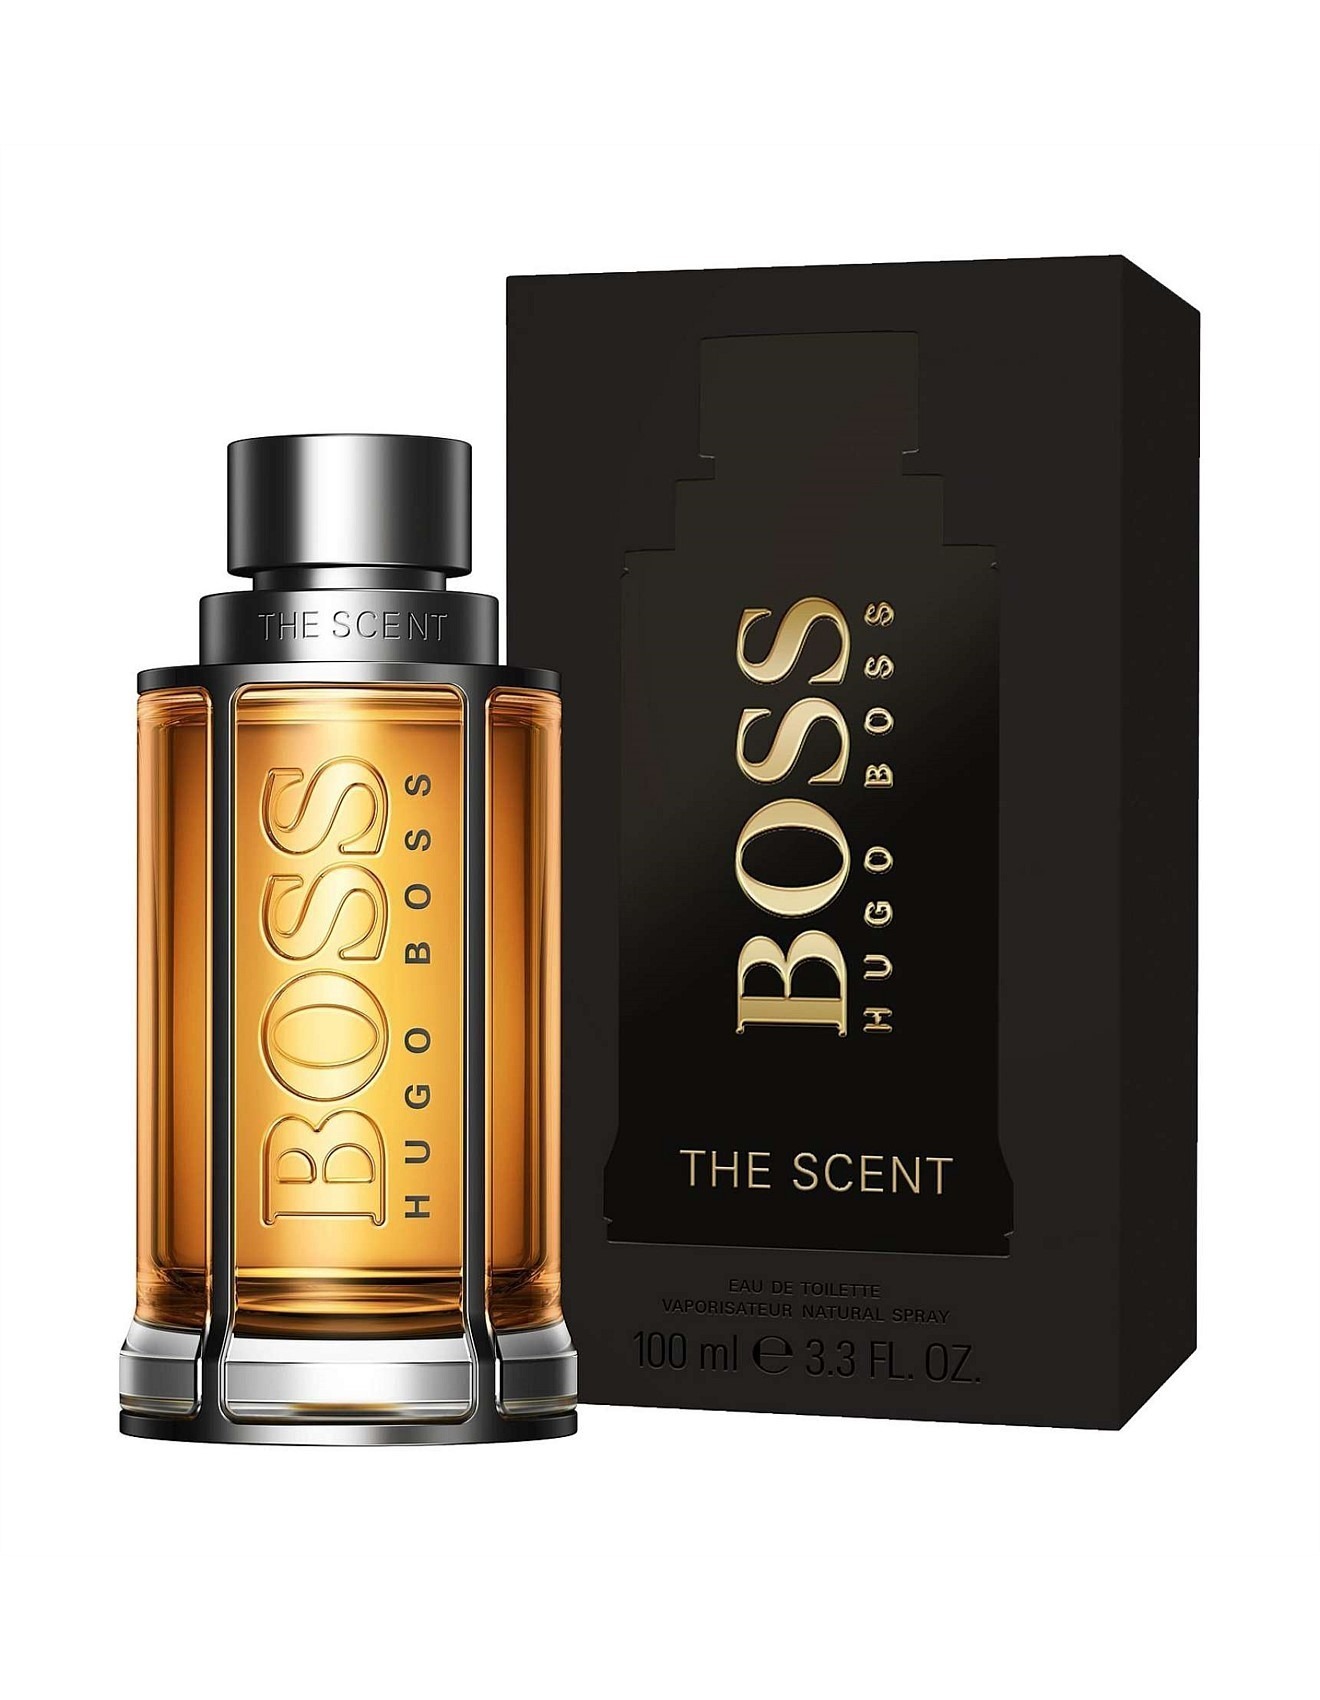 boss male perfume